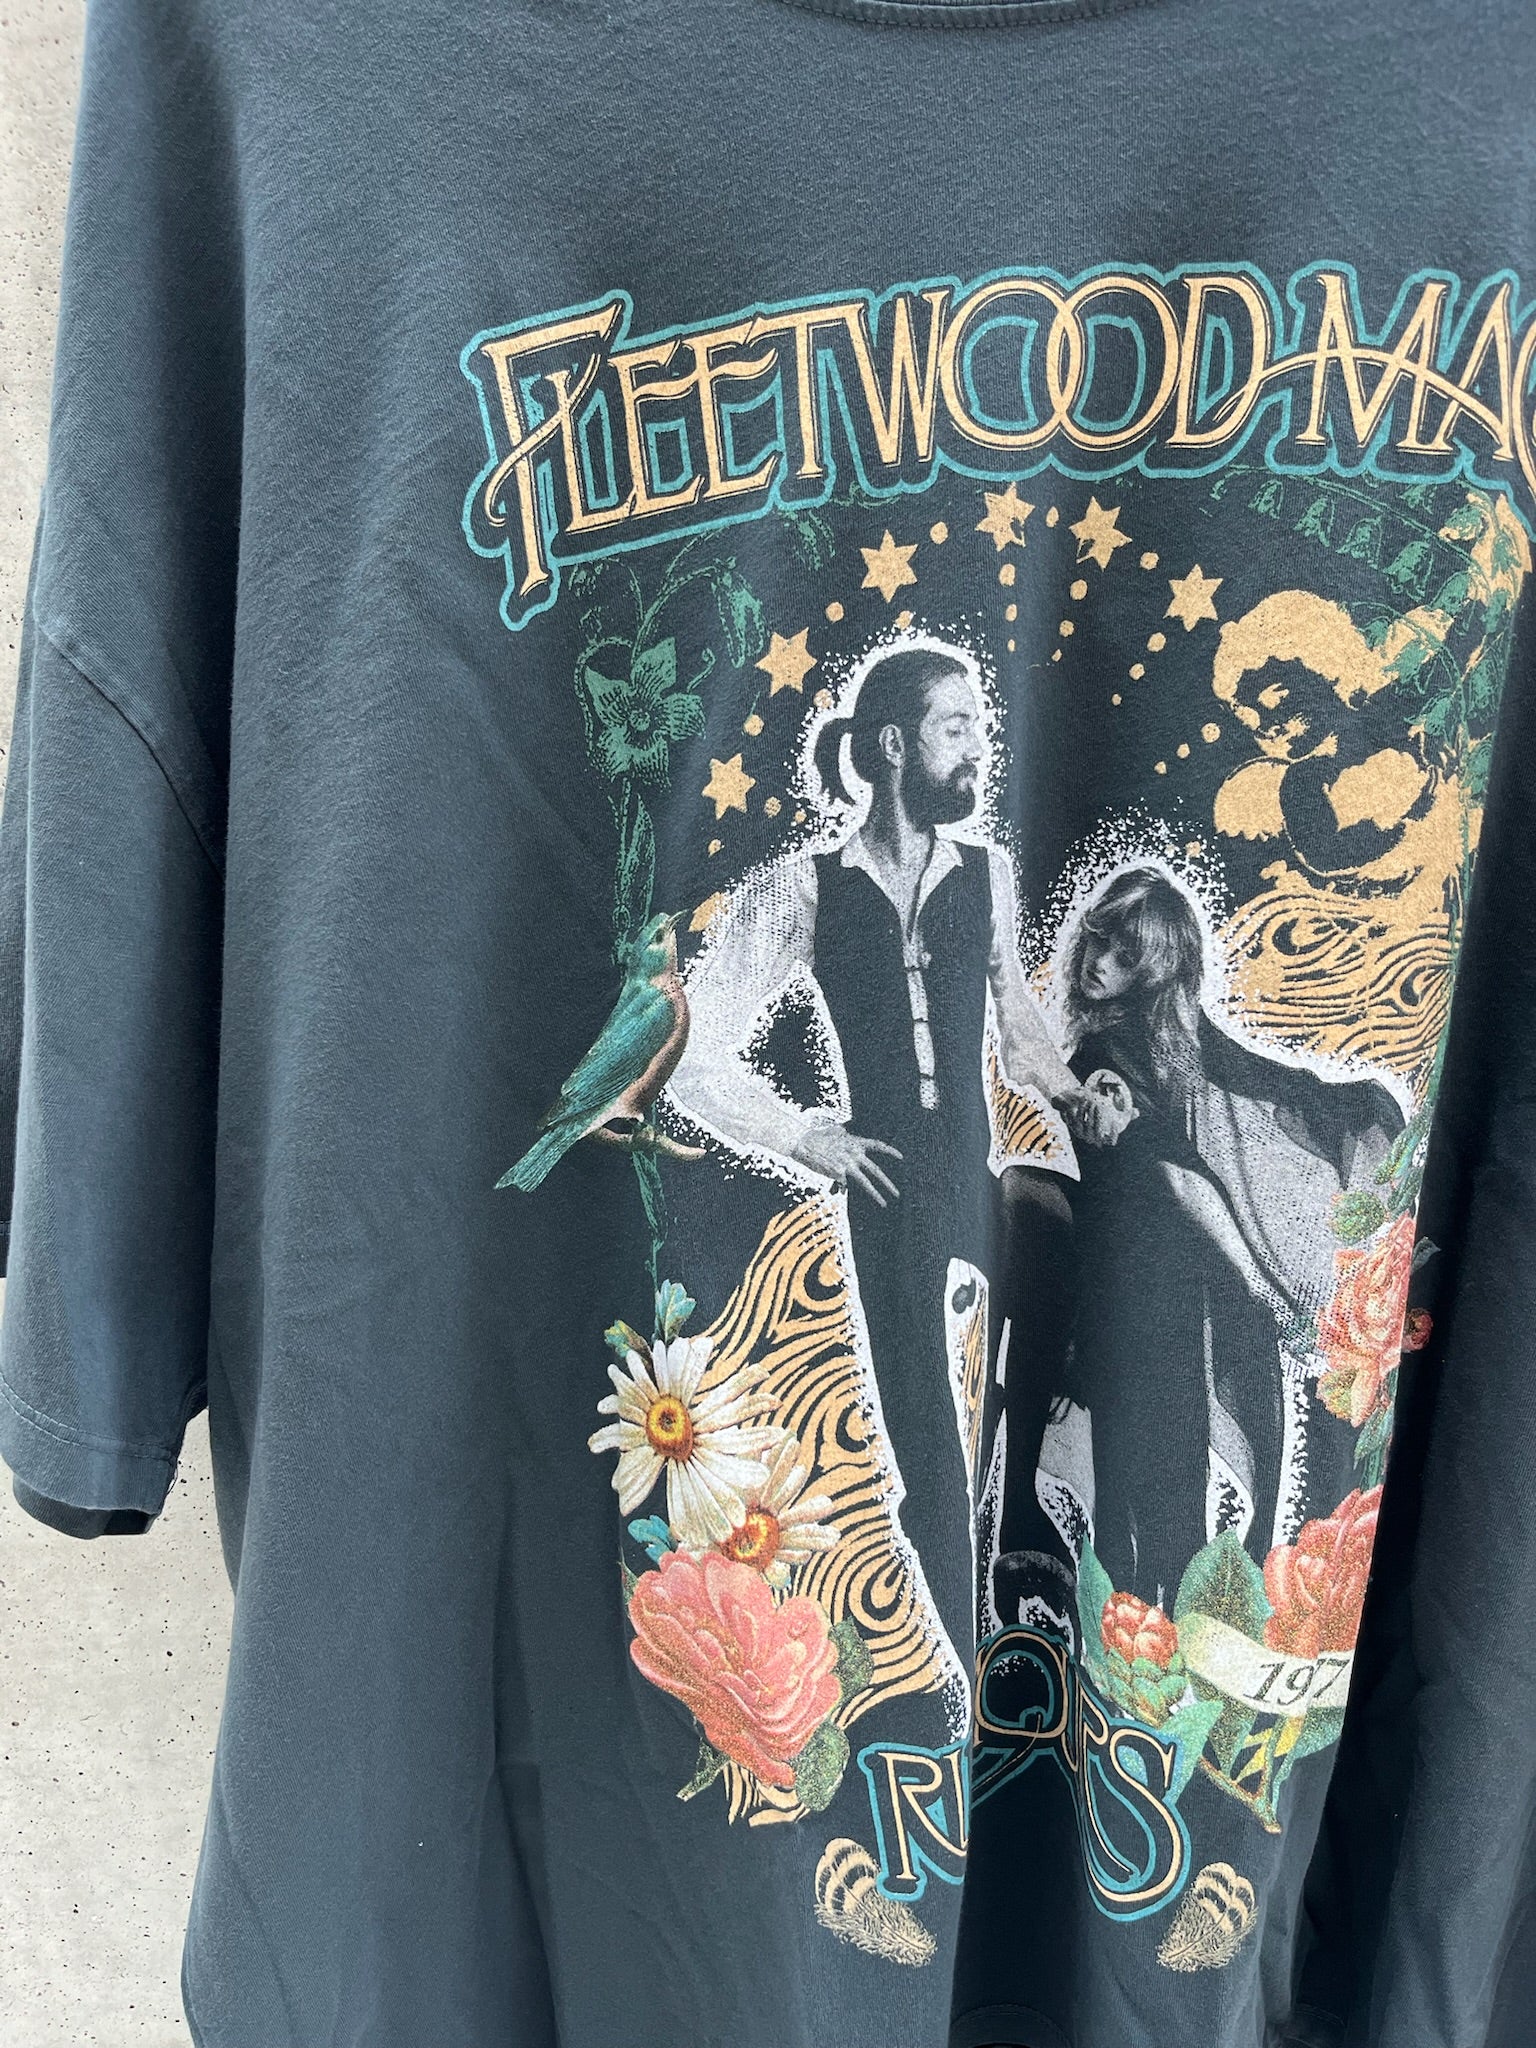 Daydreamer Fleetwood Mac Rumours Tee | Vagabond Apparel Boutique